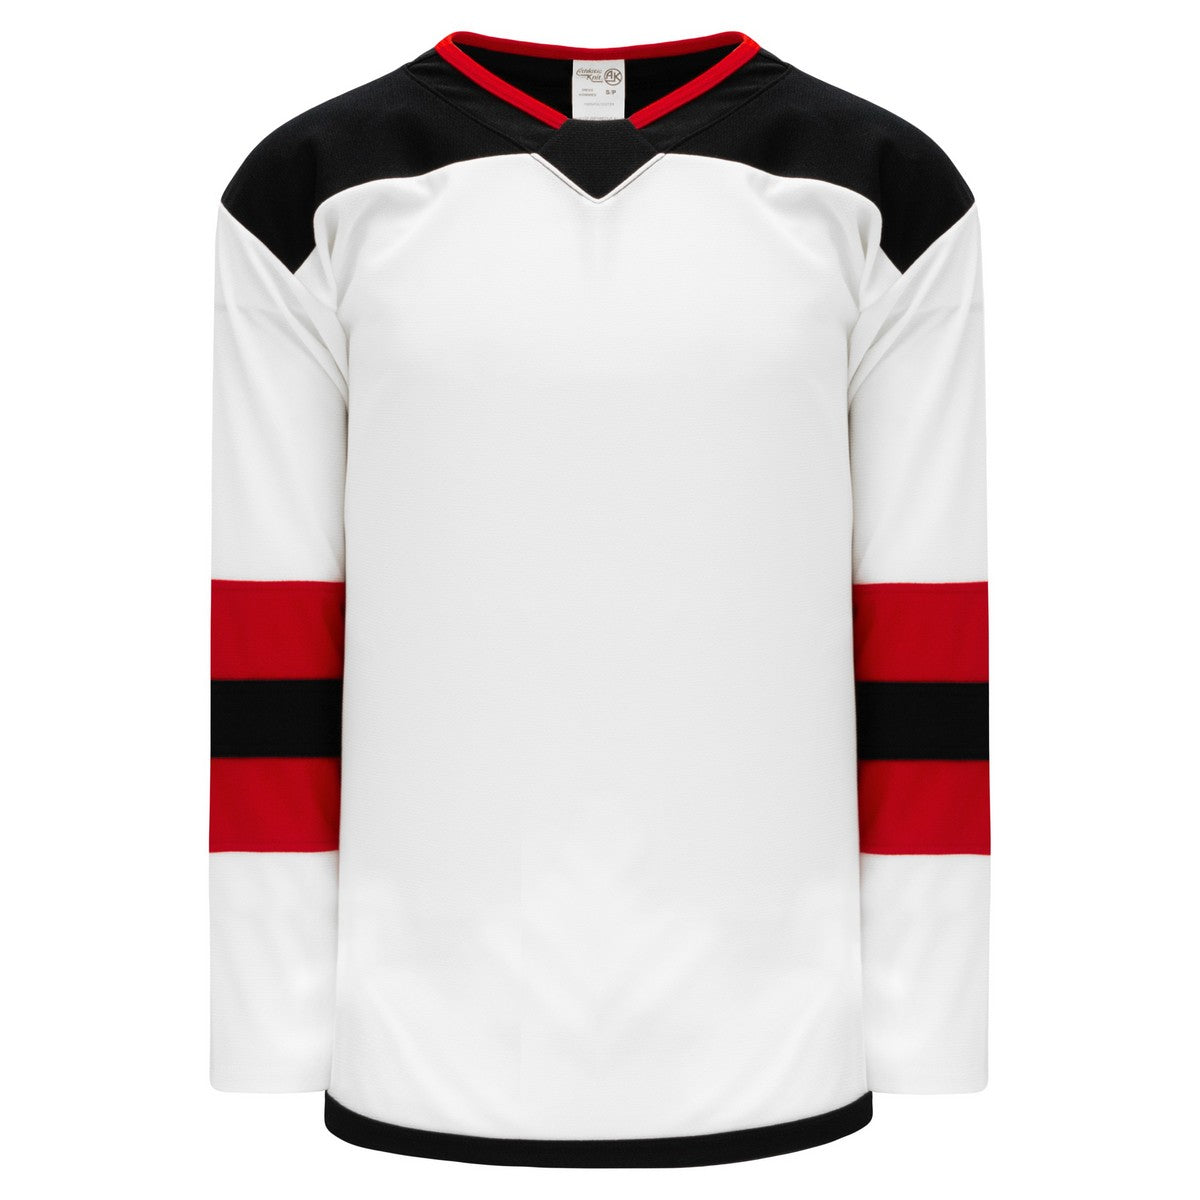 Replica Premier Style New Jersey Devils 2018 White Hockey Jersey